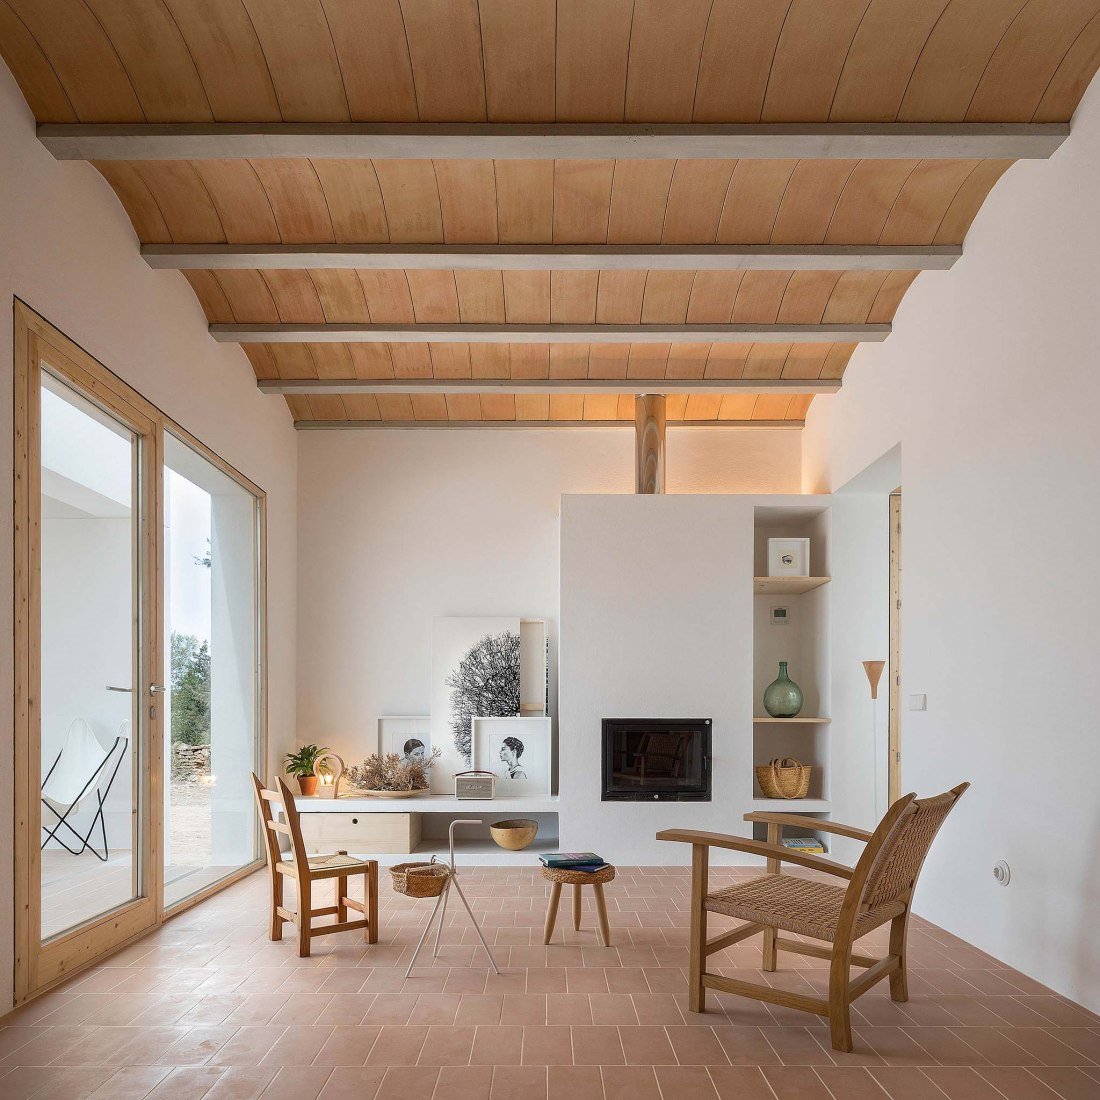 Casa en Formentera del arquitecto Maria Castello. Butaca de Torres Clavé